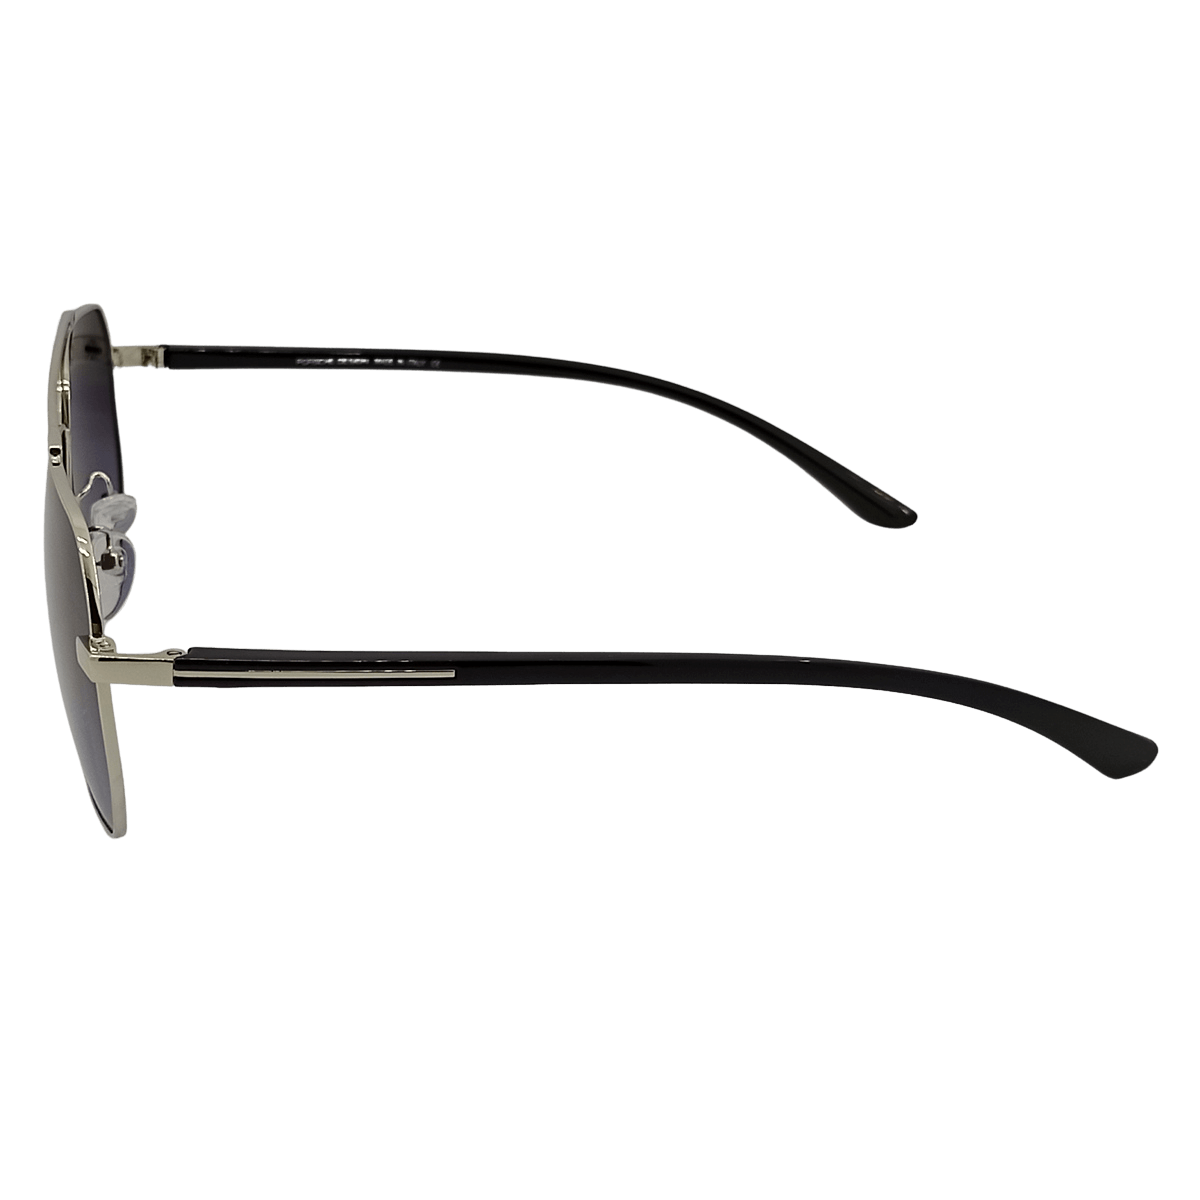 Nine Optic - Exclusive Sunglasses at affordable price ! Always Unique